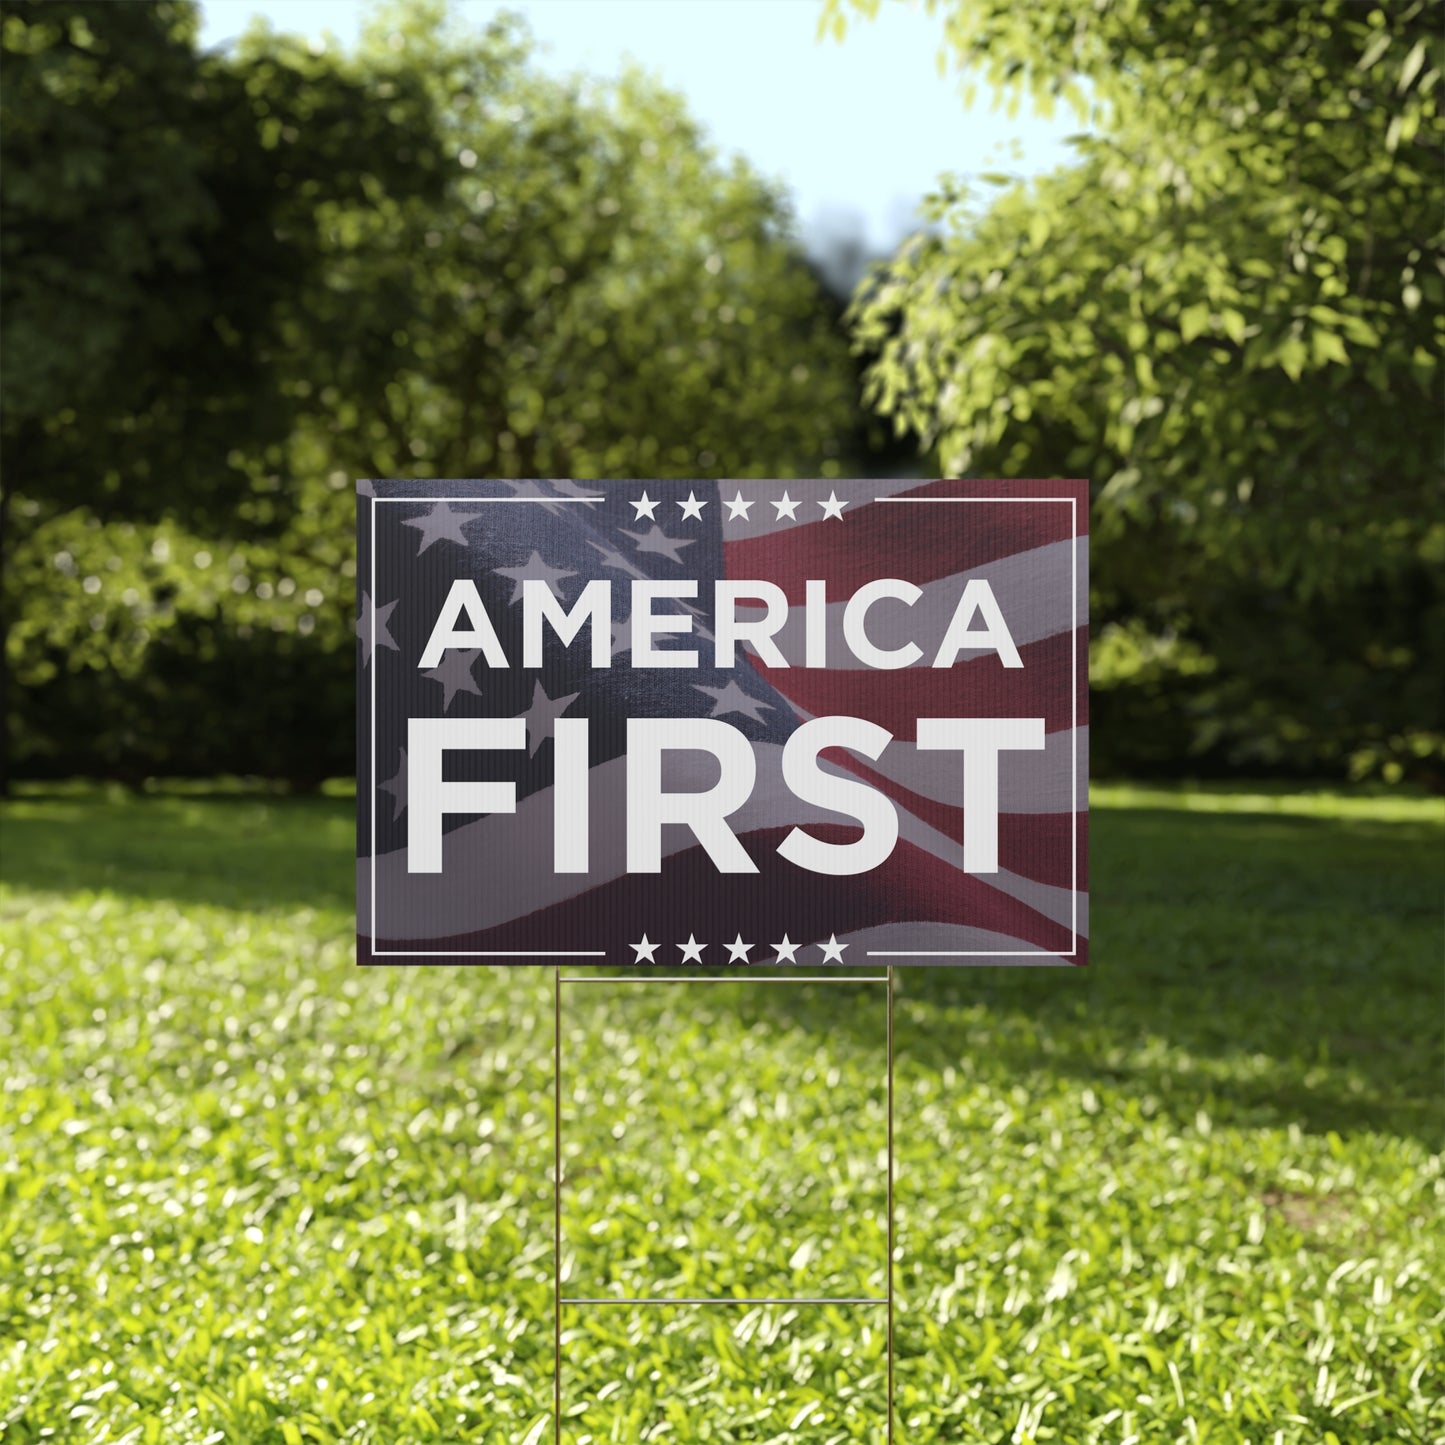 America First Yard Sign